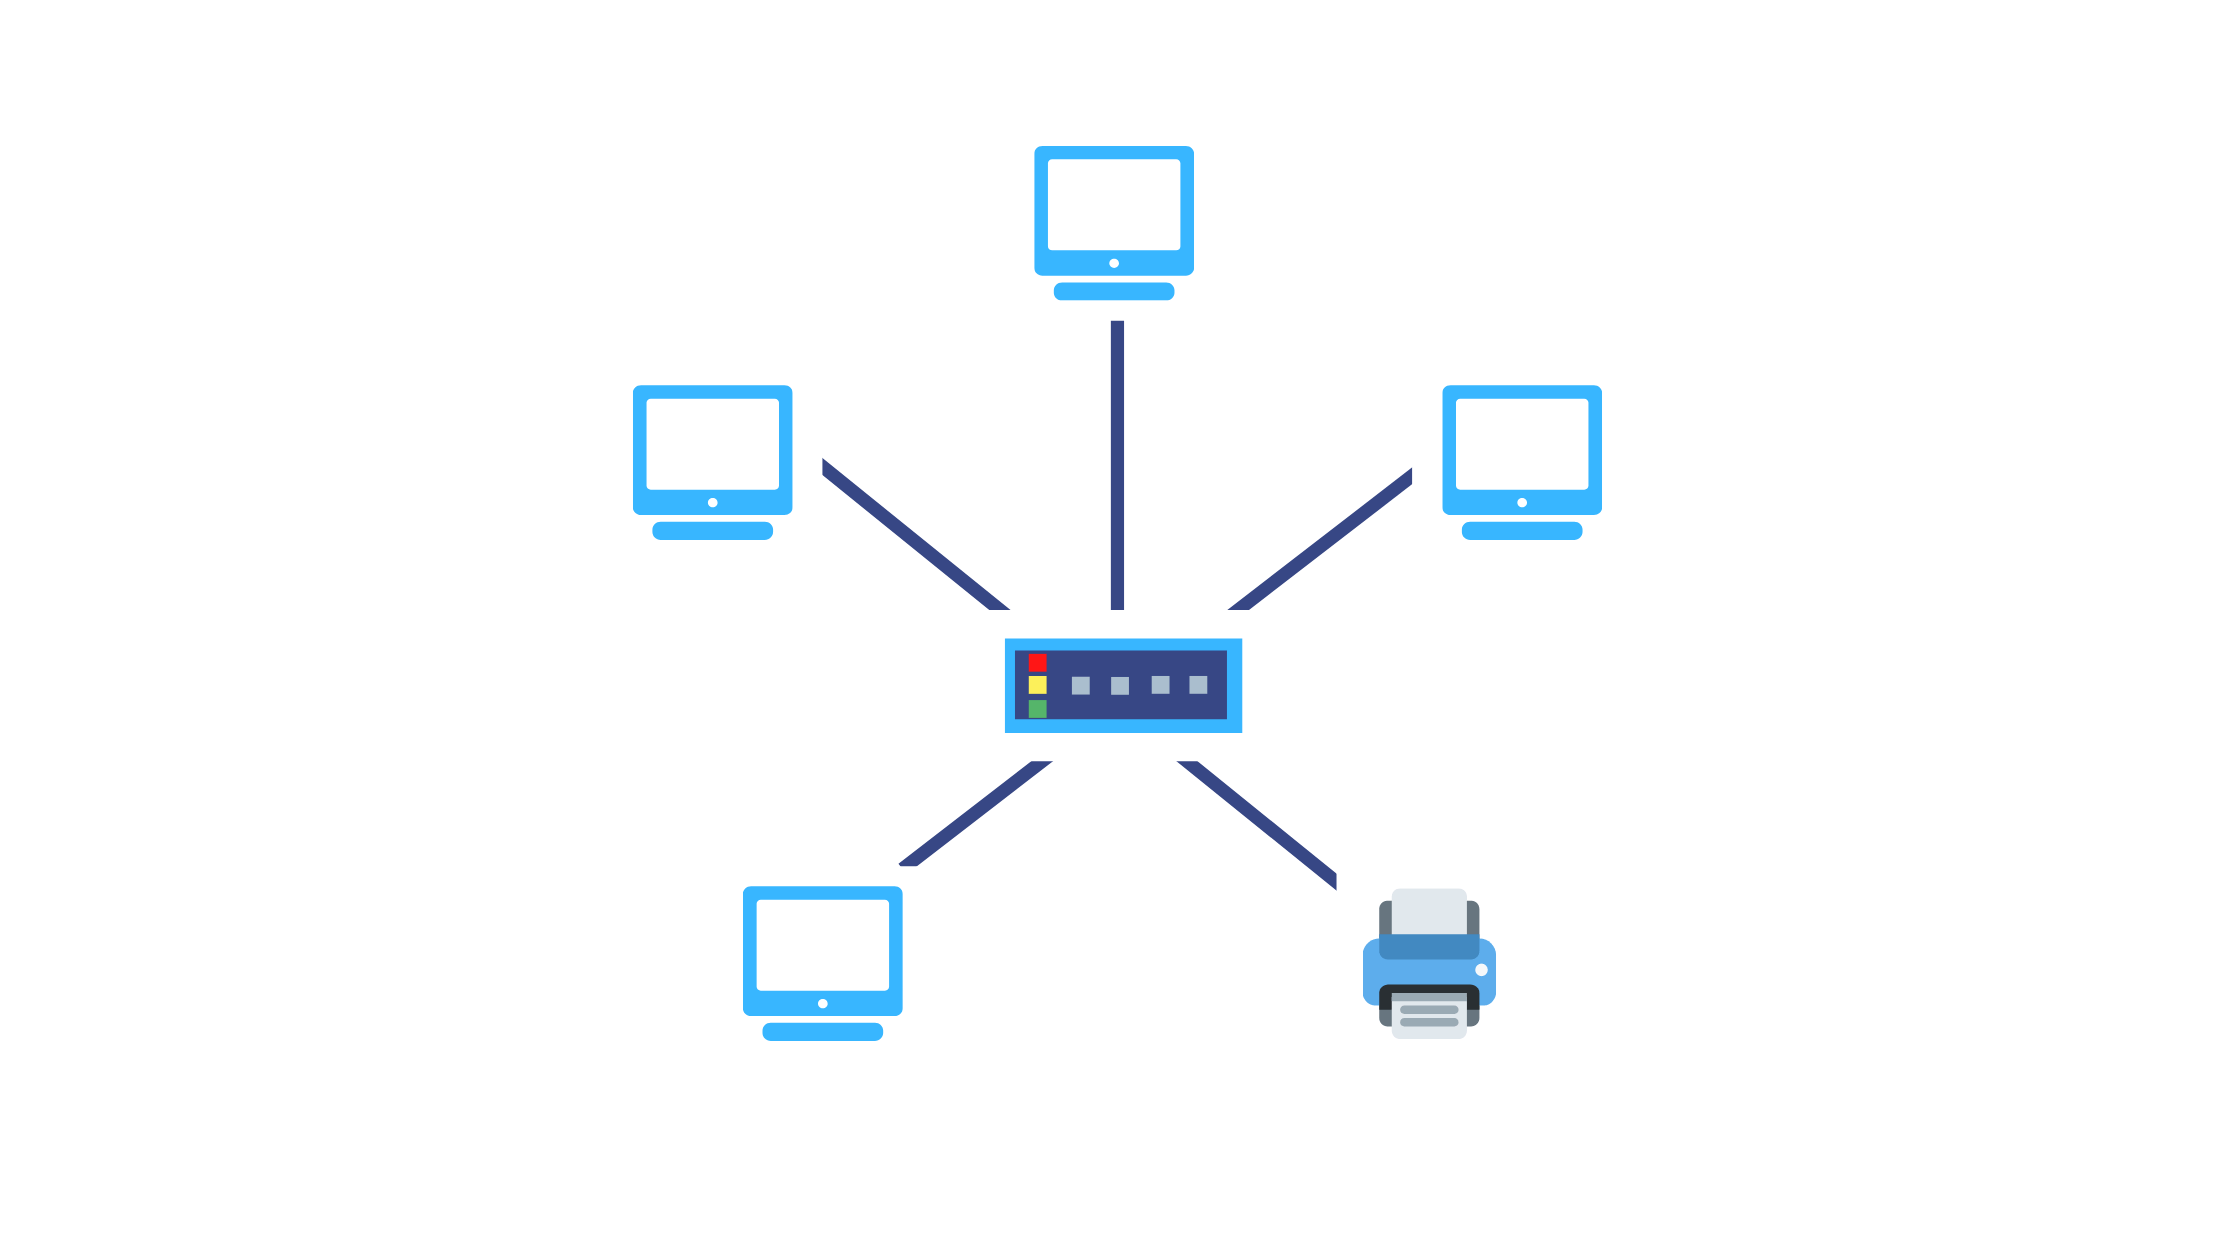 Network diagrams guide